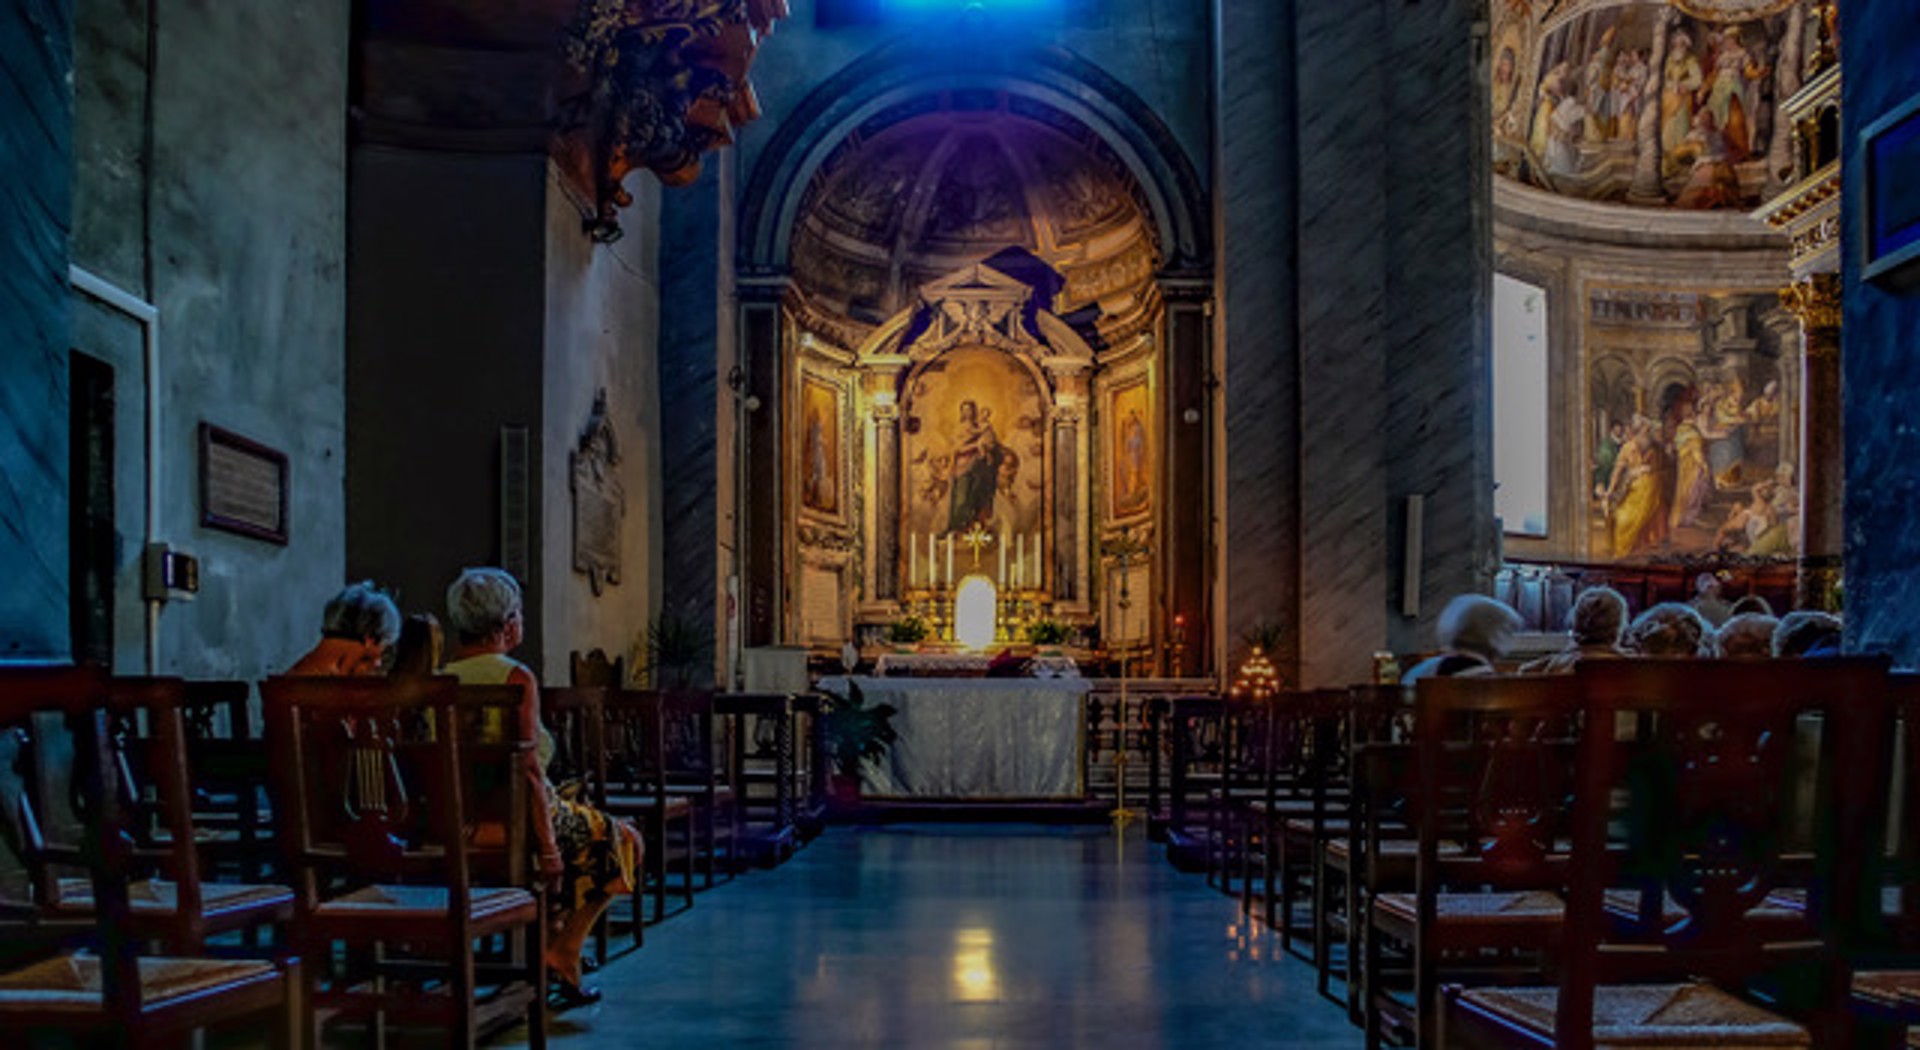 Beautiful Church, Romę, Italy by Lawrence McFarland